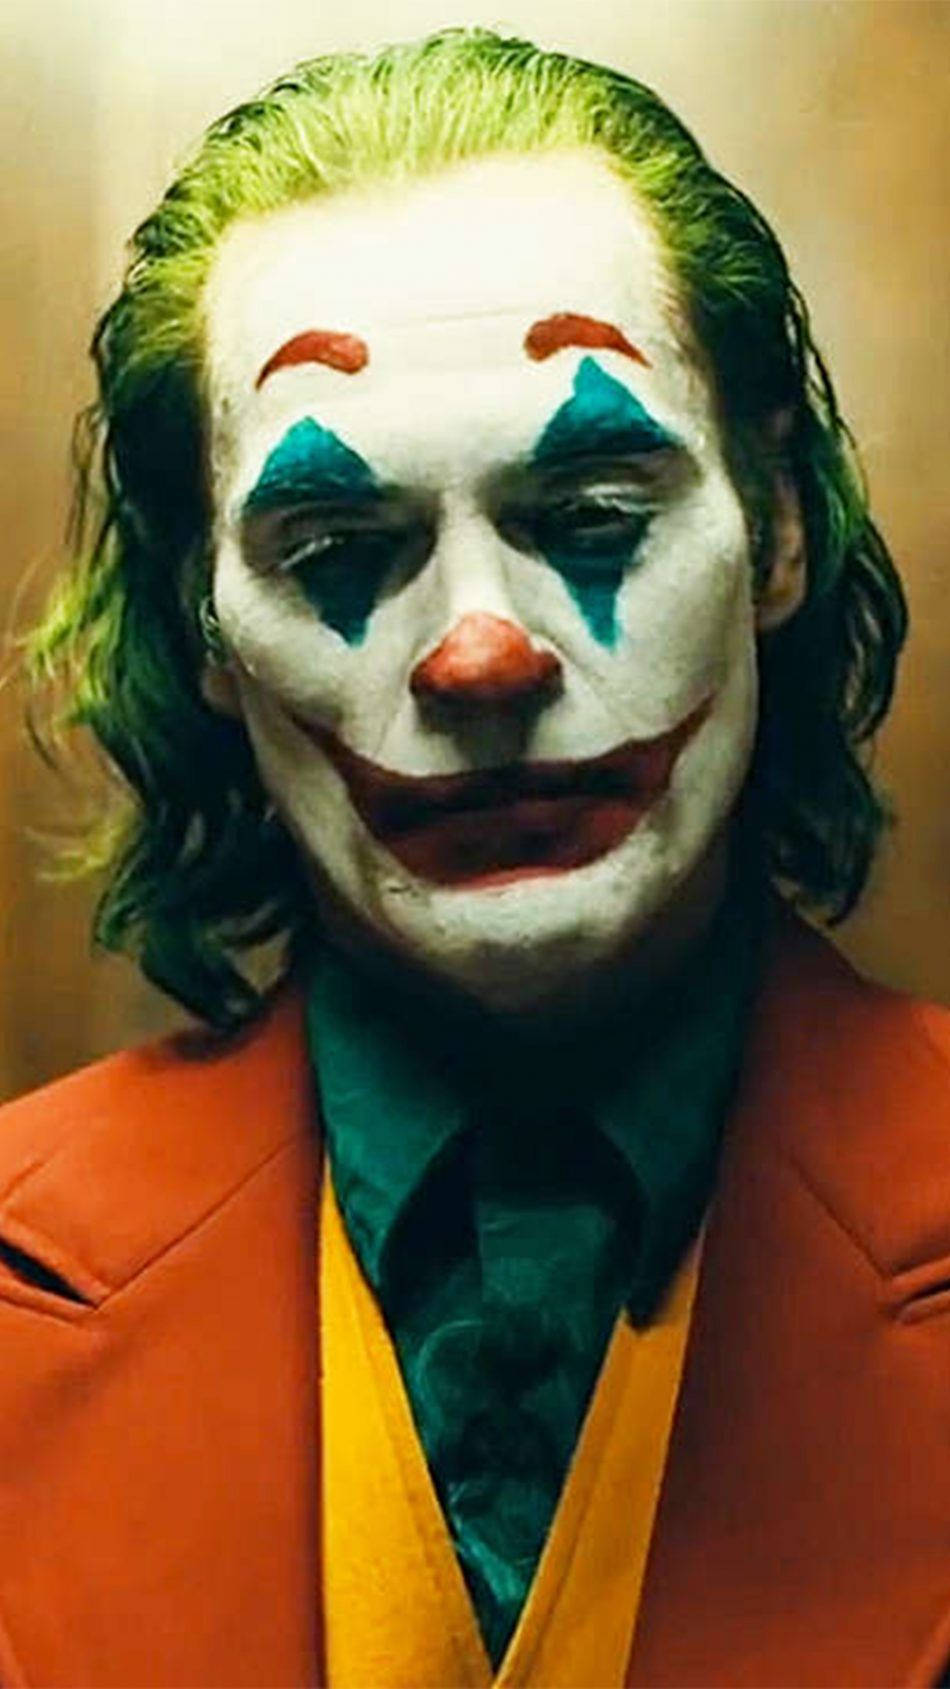 Joker2019 Joaquin Phoenix - Papel De Parede Para Computador Ou Celular. Papel de Parede